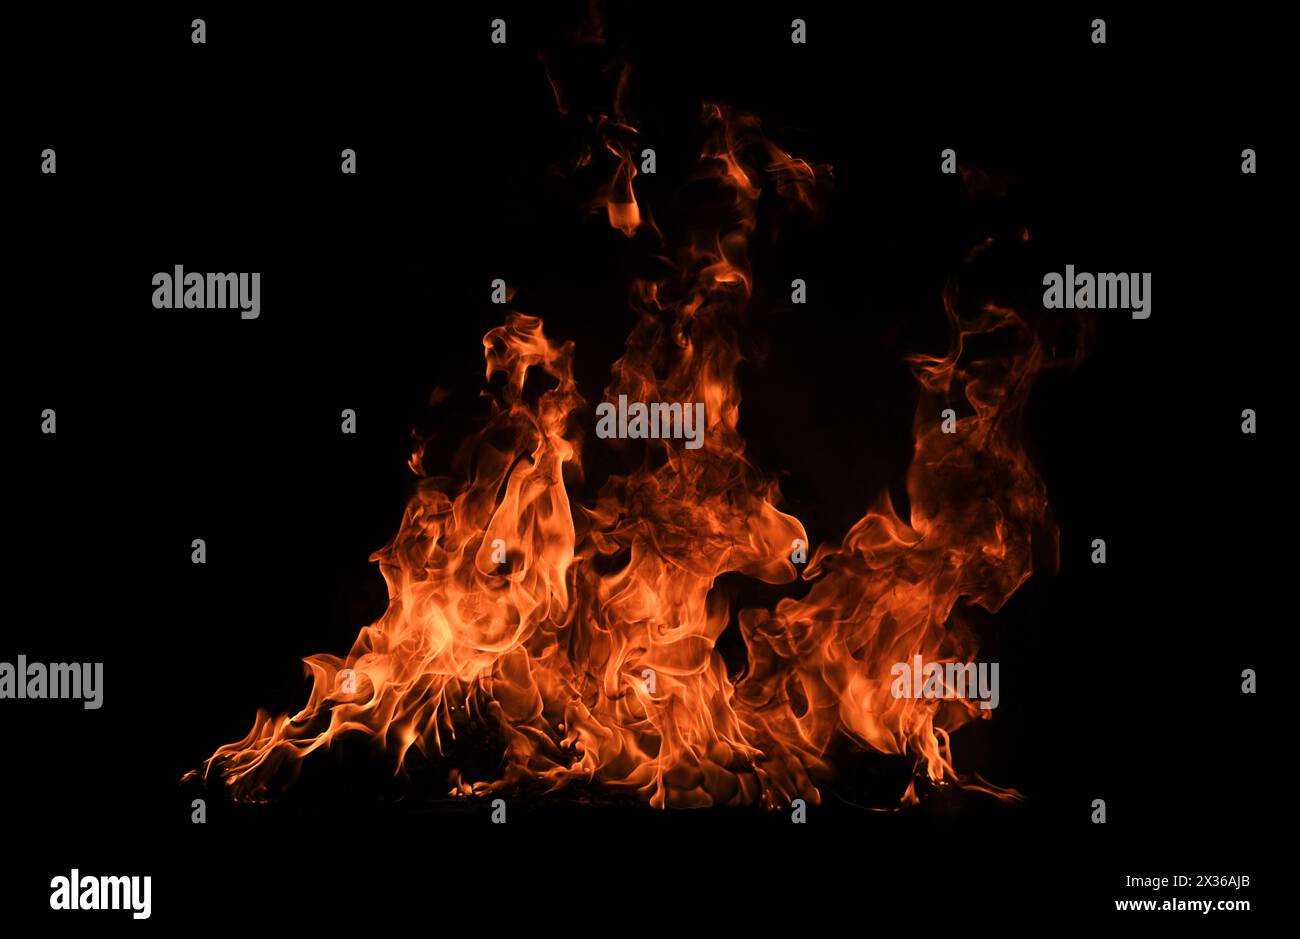 Blaze burning fire flame on art texture background. Stock Photo